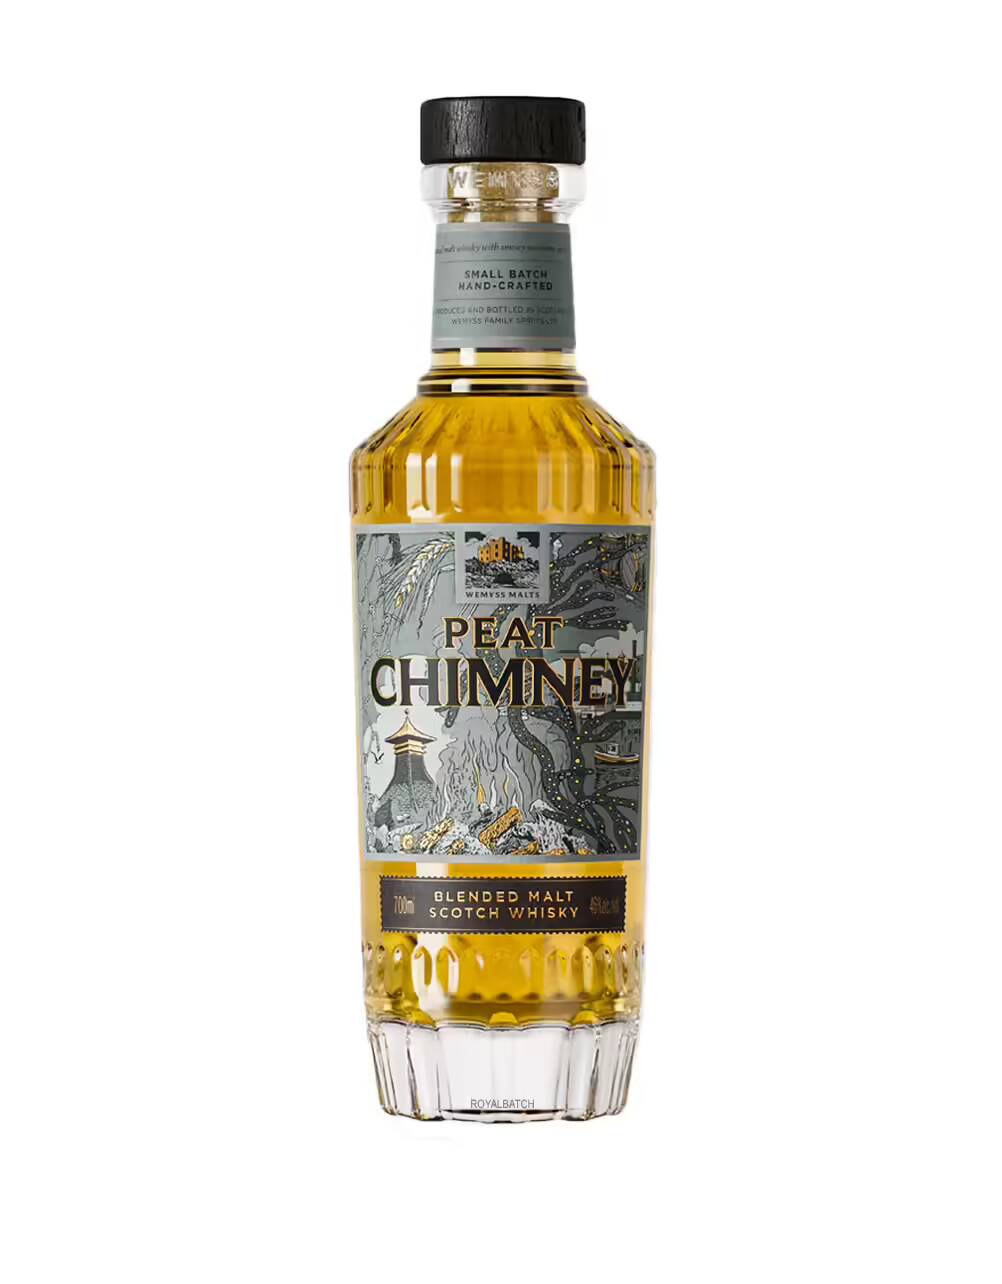 Wemyss Malts Peat Chimney Scotch Whisky